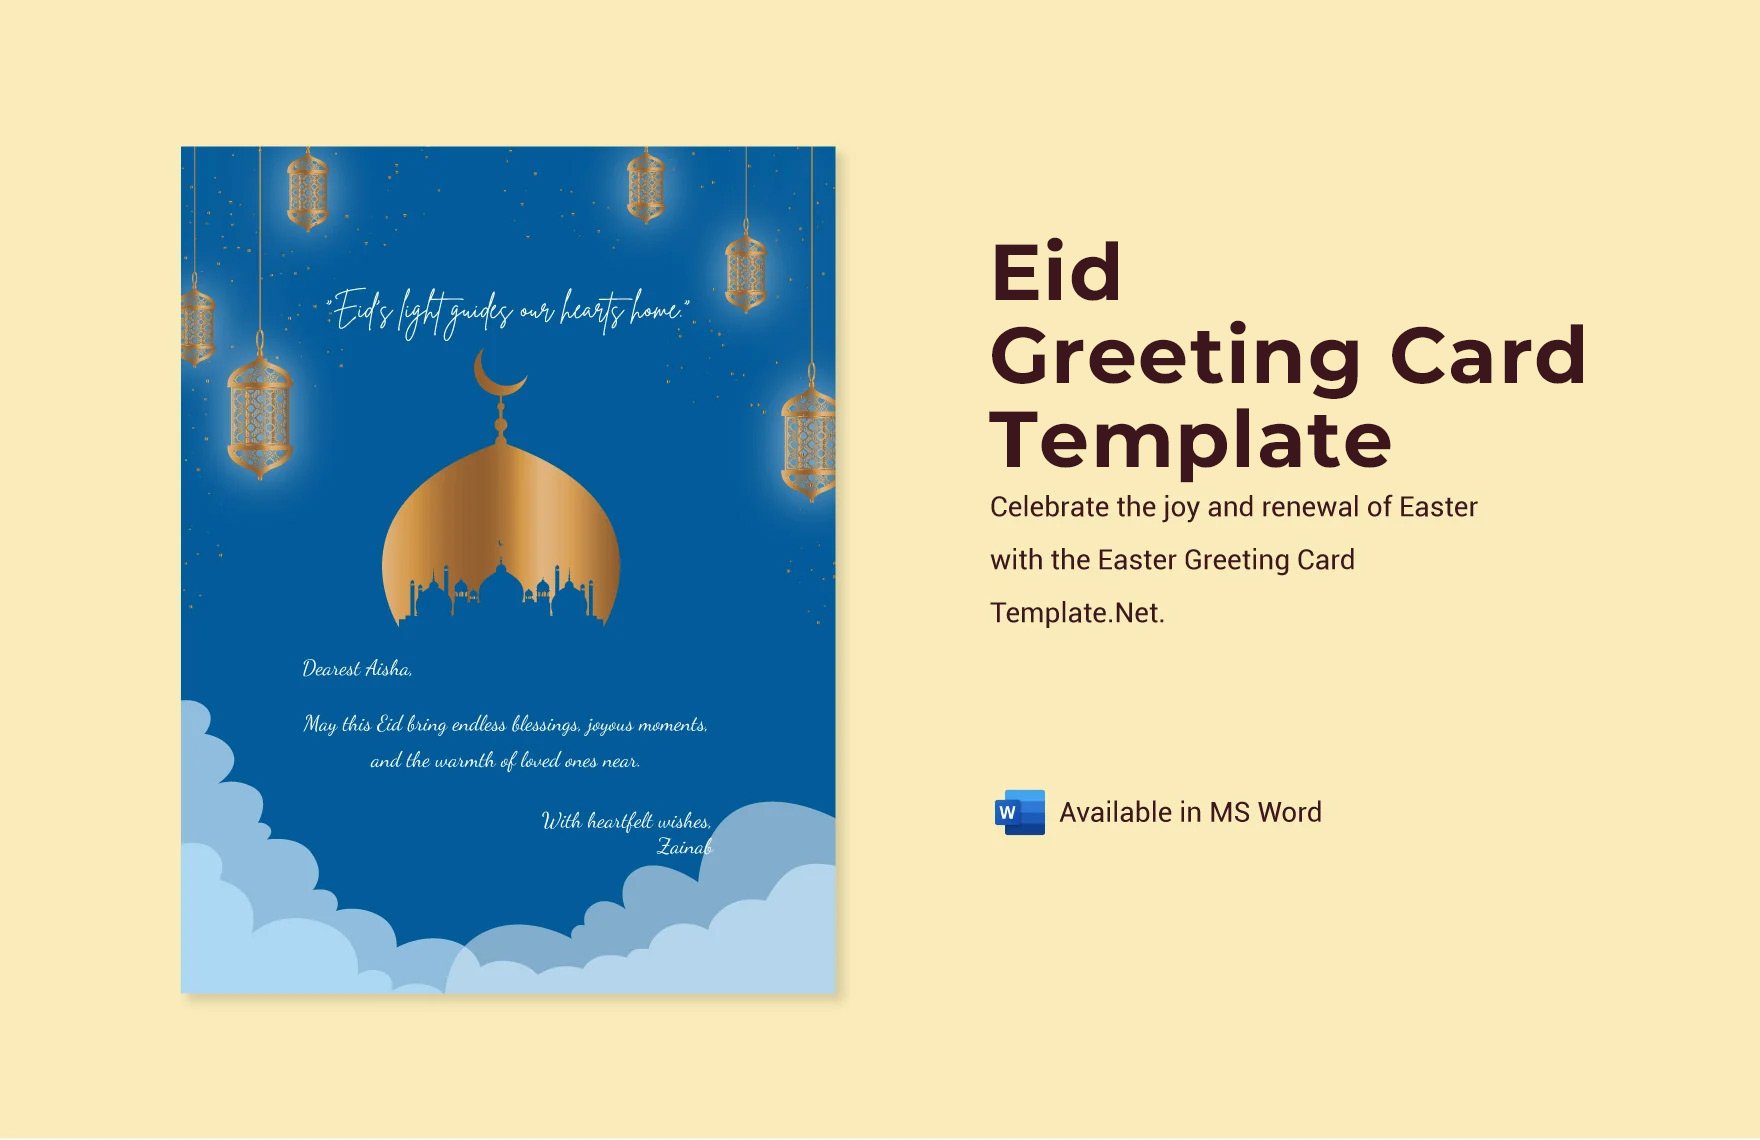 Eid Greeting Card Template